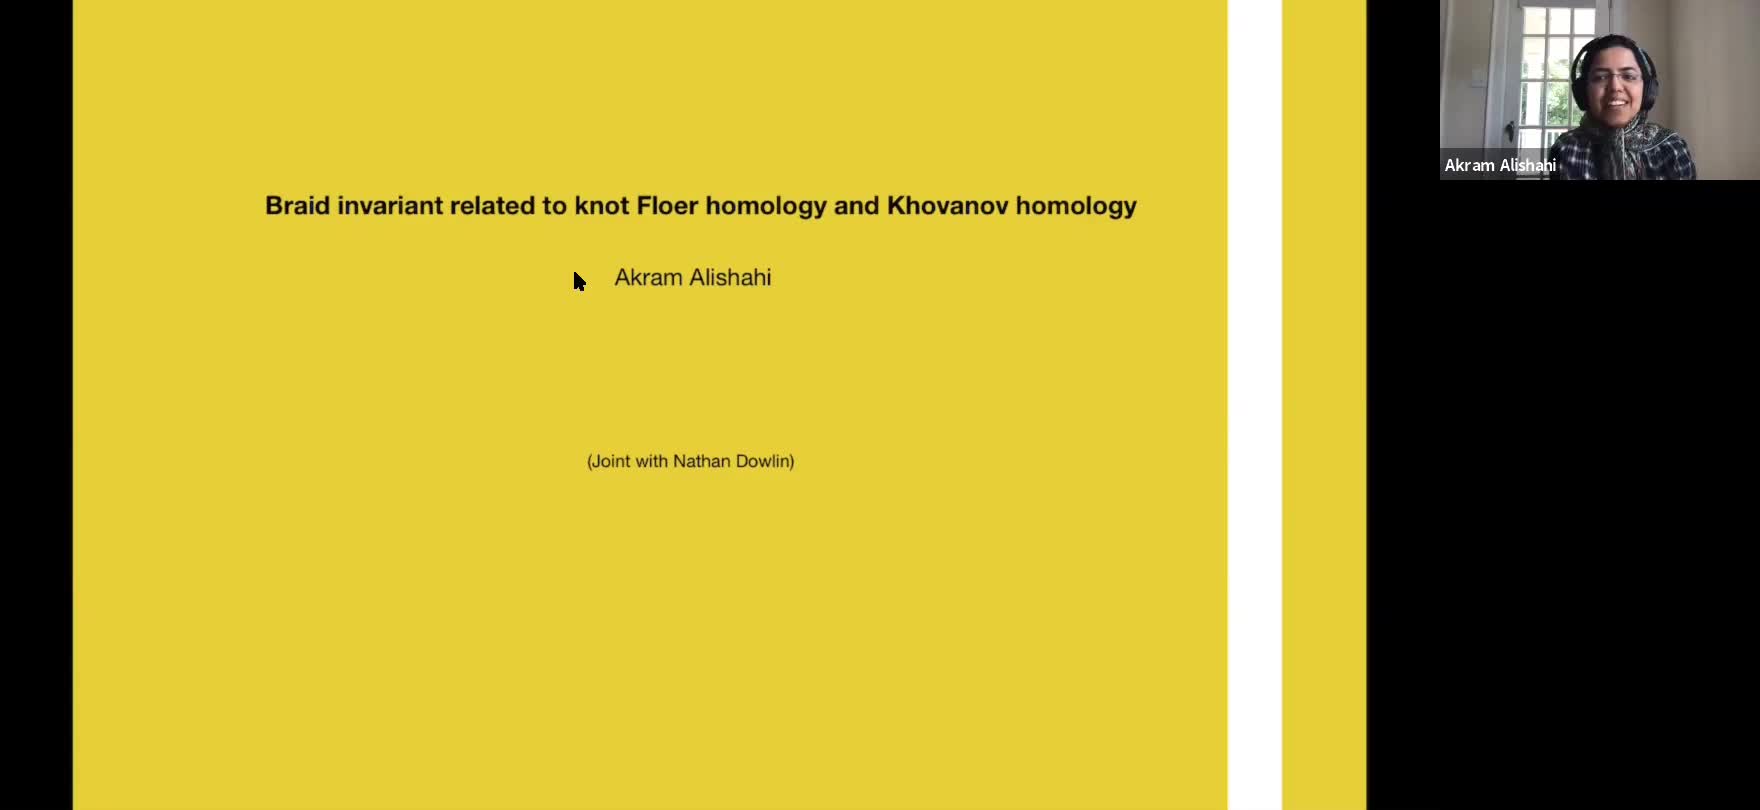 PQLHT | Conference Talk 6 by Akram Alishahi: "Braid invariant related to knot Floer homology and Khovanov homology"